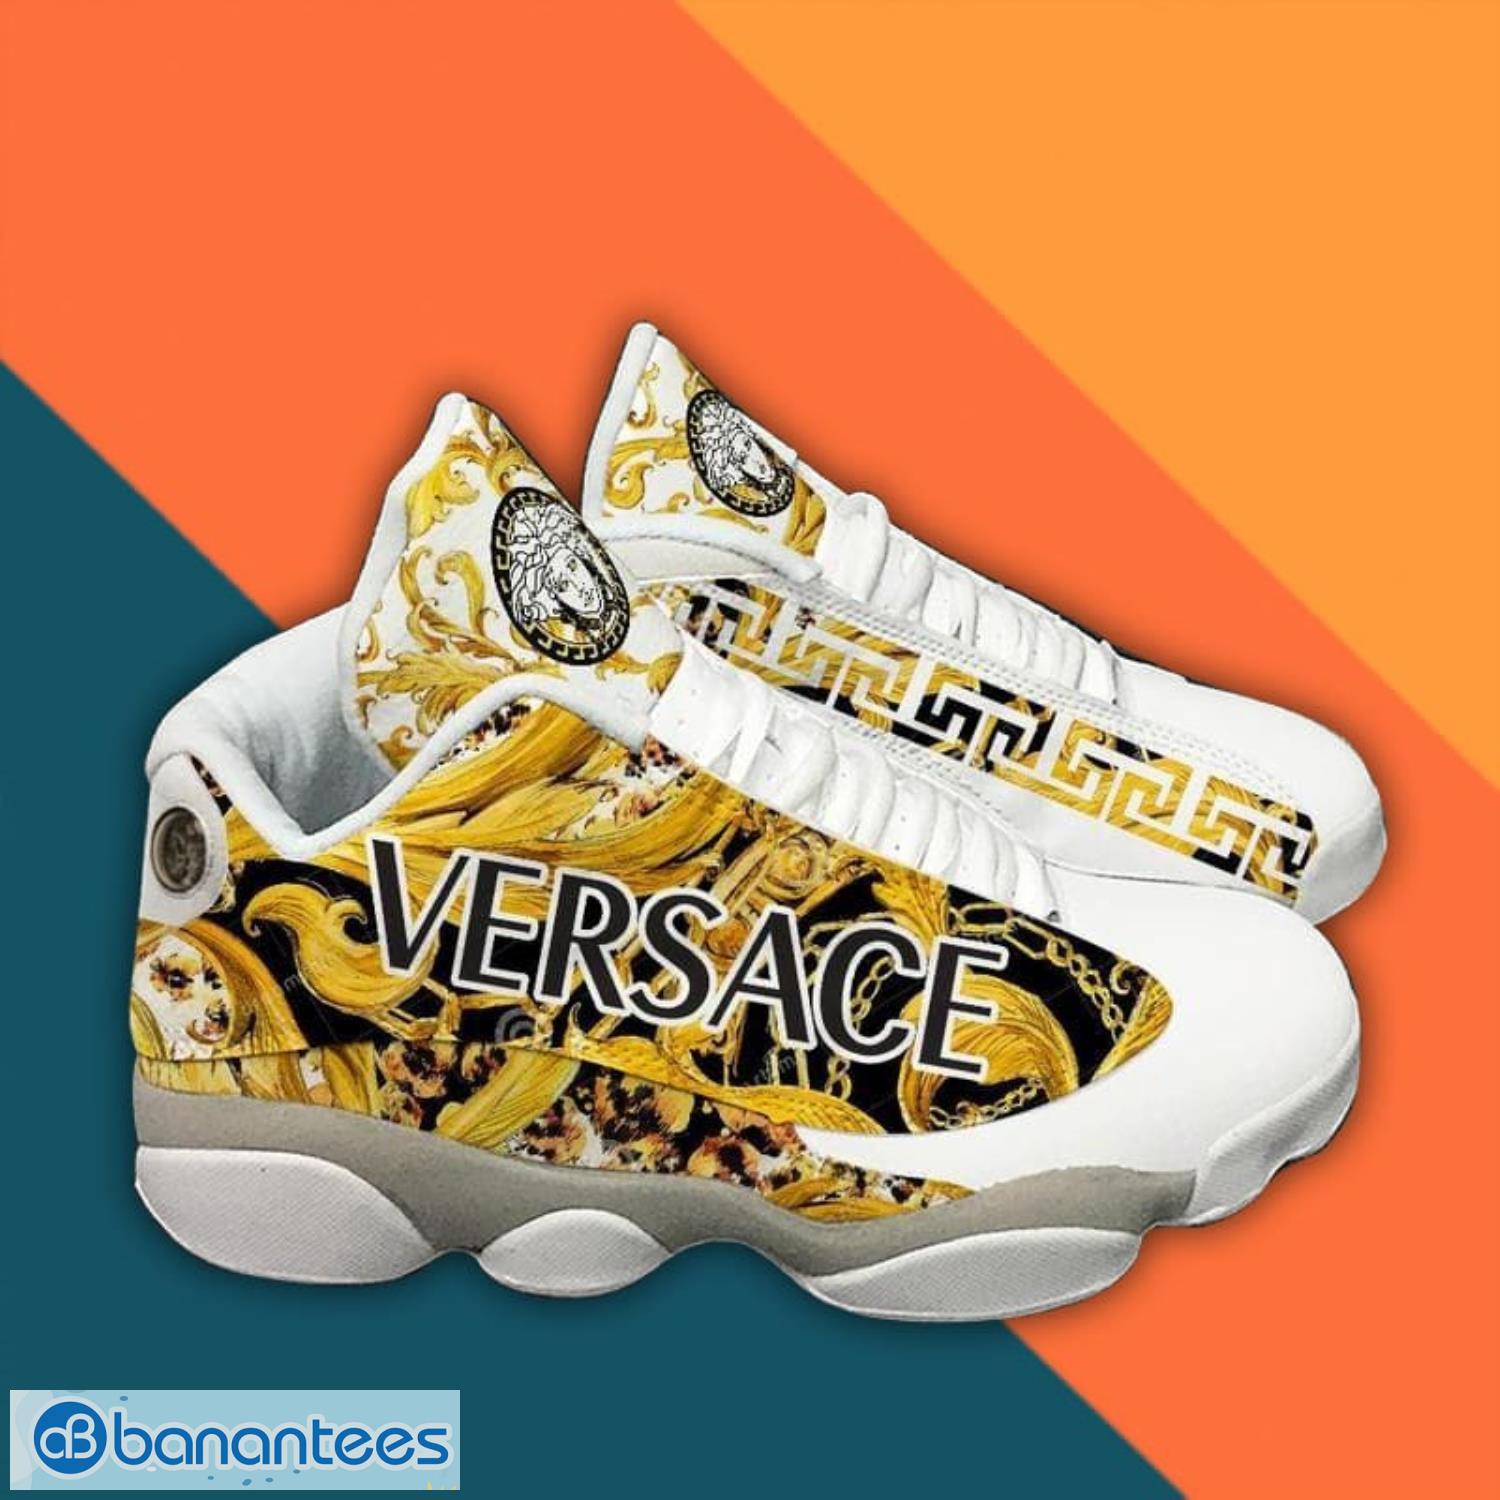 Versace Golden Shoes Air Jordan 13 Sneaker Product Photo 2